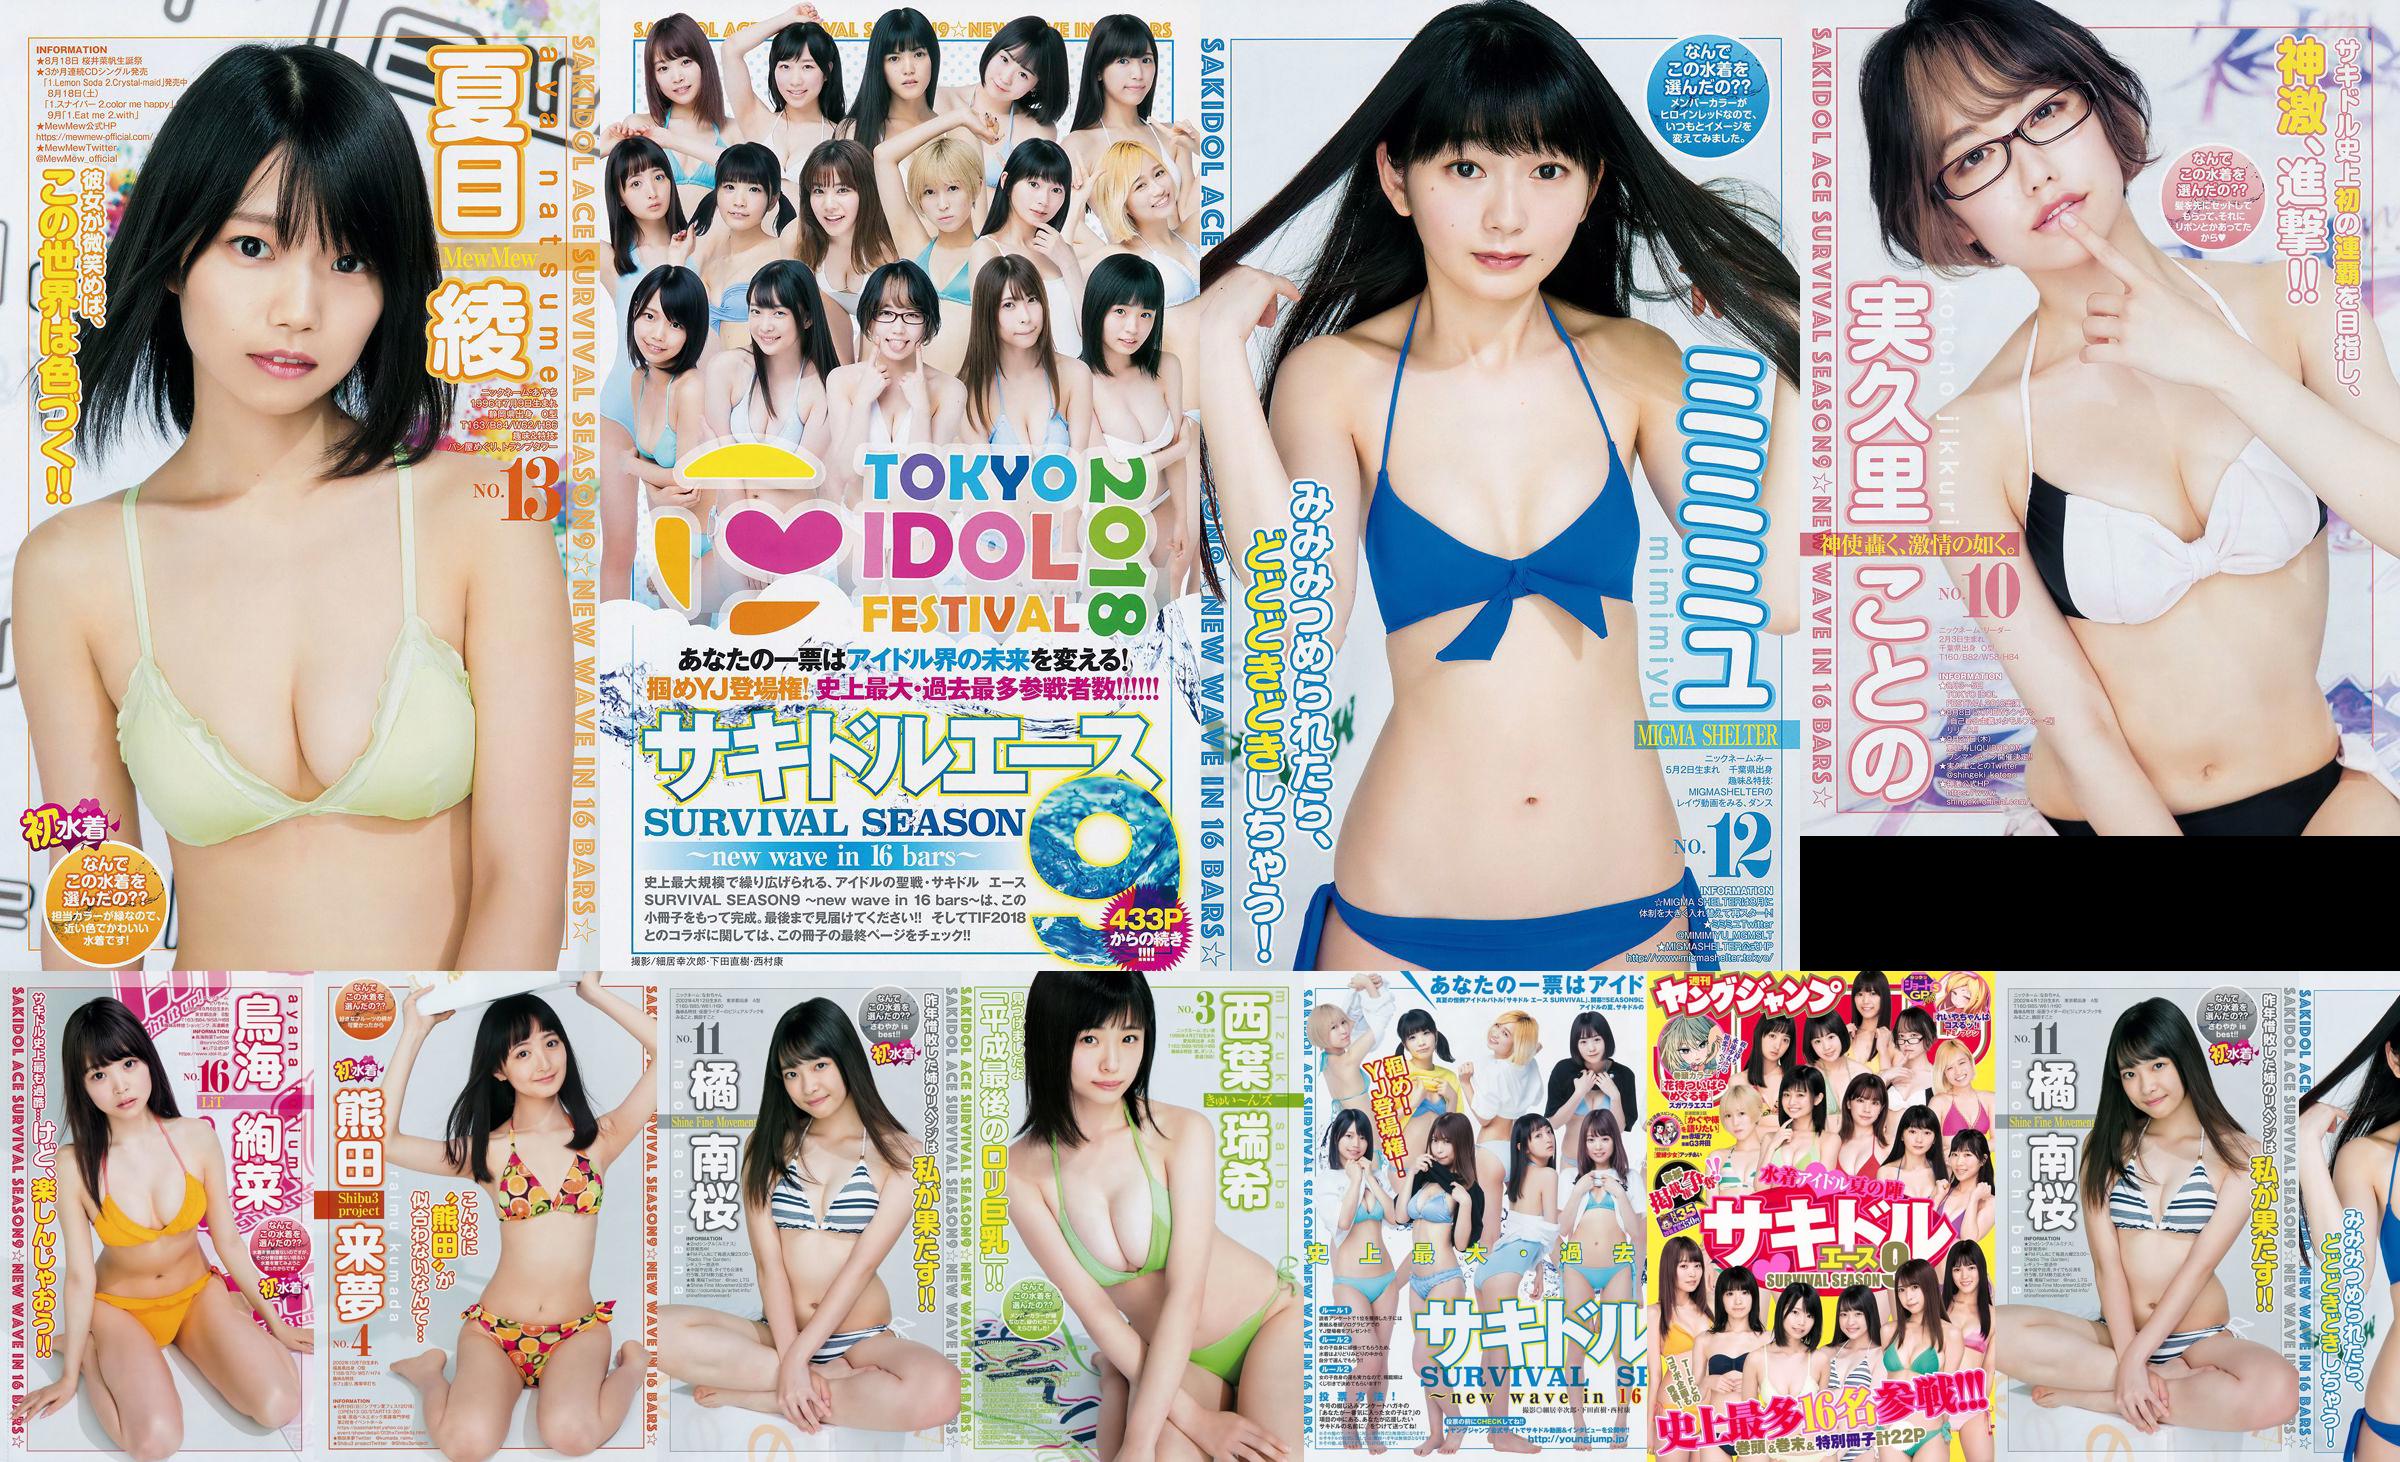 [FLASH] Ikumi Hisamatsu Risa Hirako Ren Ishikawa Angel Moe AKB48 Kaho Shibuya Misuzu Hayashi Ririka 2015.04.21 Photo Toshi No.f738a0 Page 2